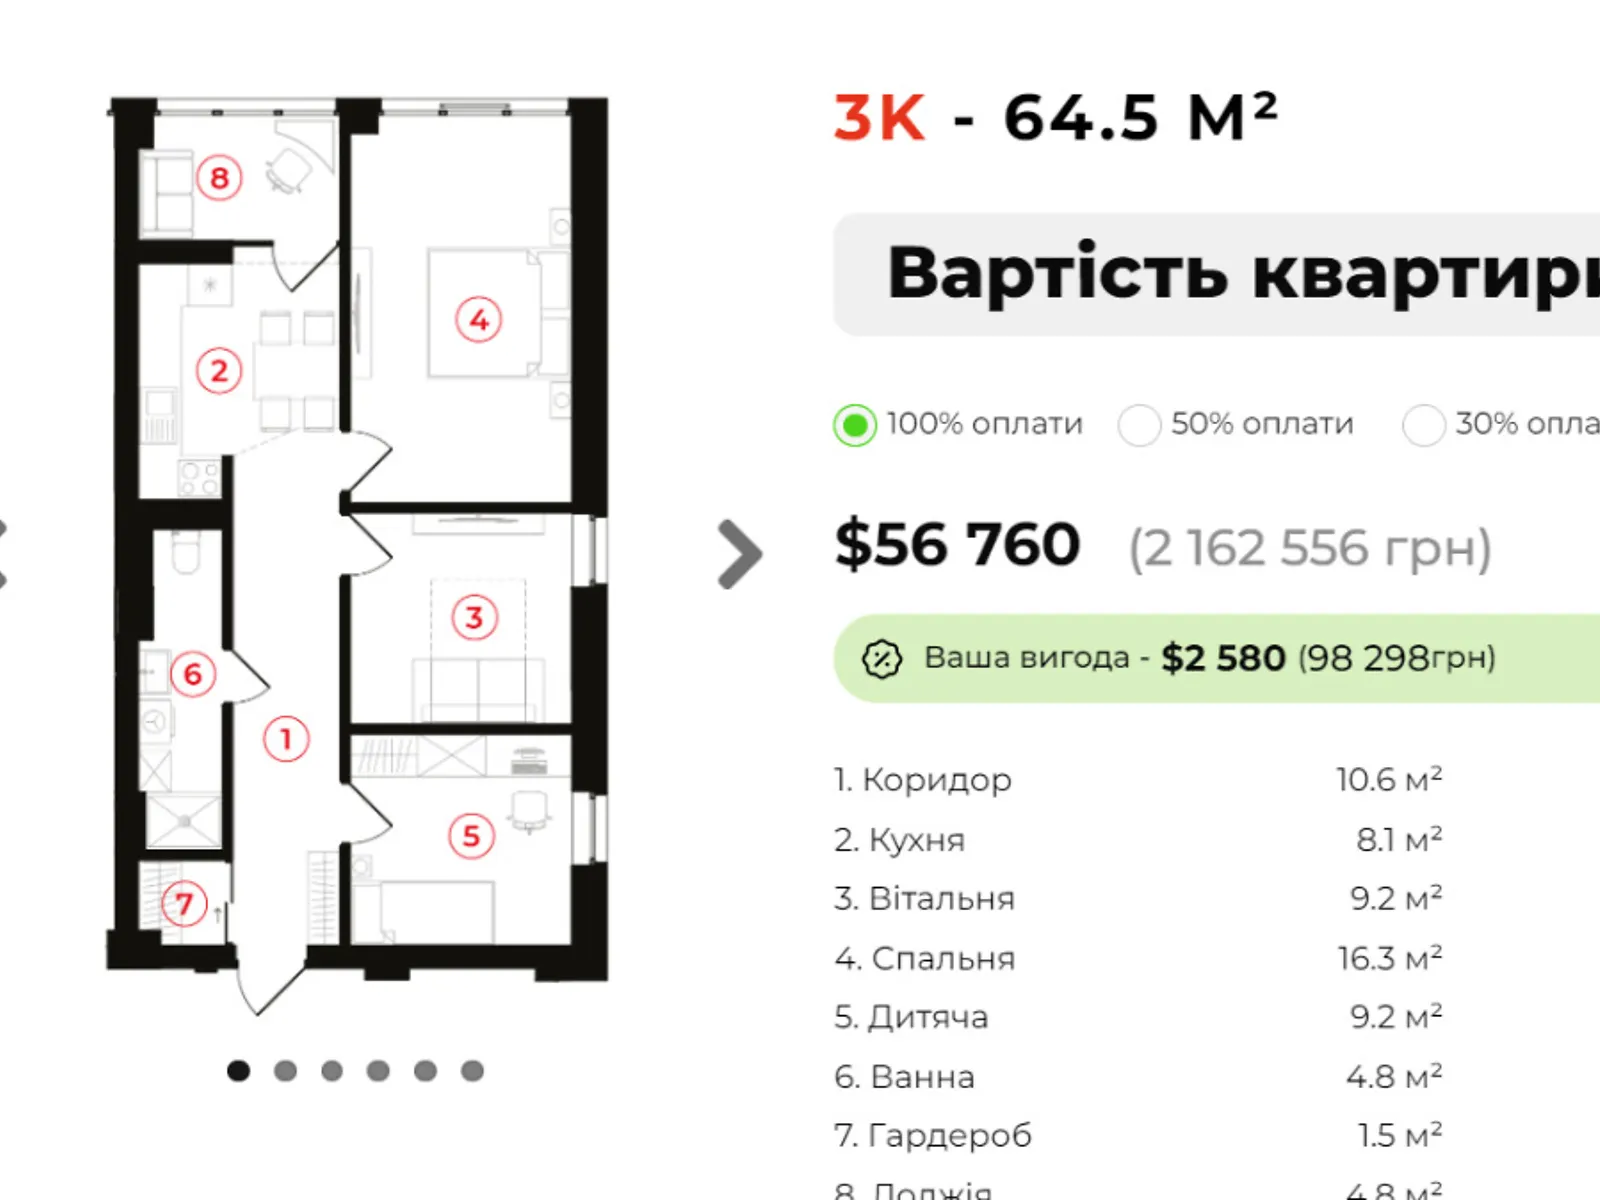 Продается 3-комнатная квартира 64.5 кв. м в Ивано-Франковске, ул. Солнечная, 25 - фото 1